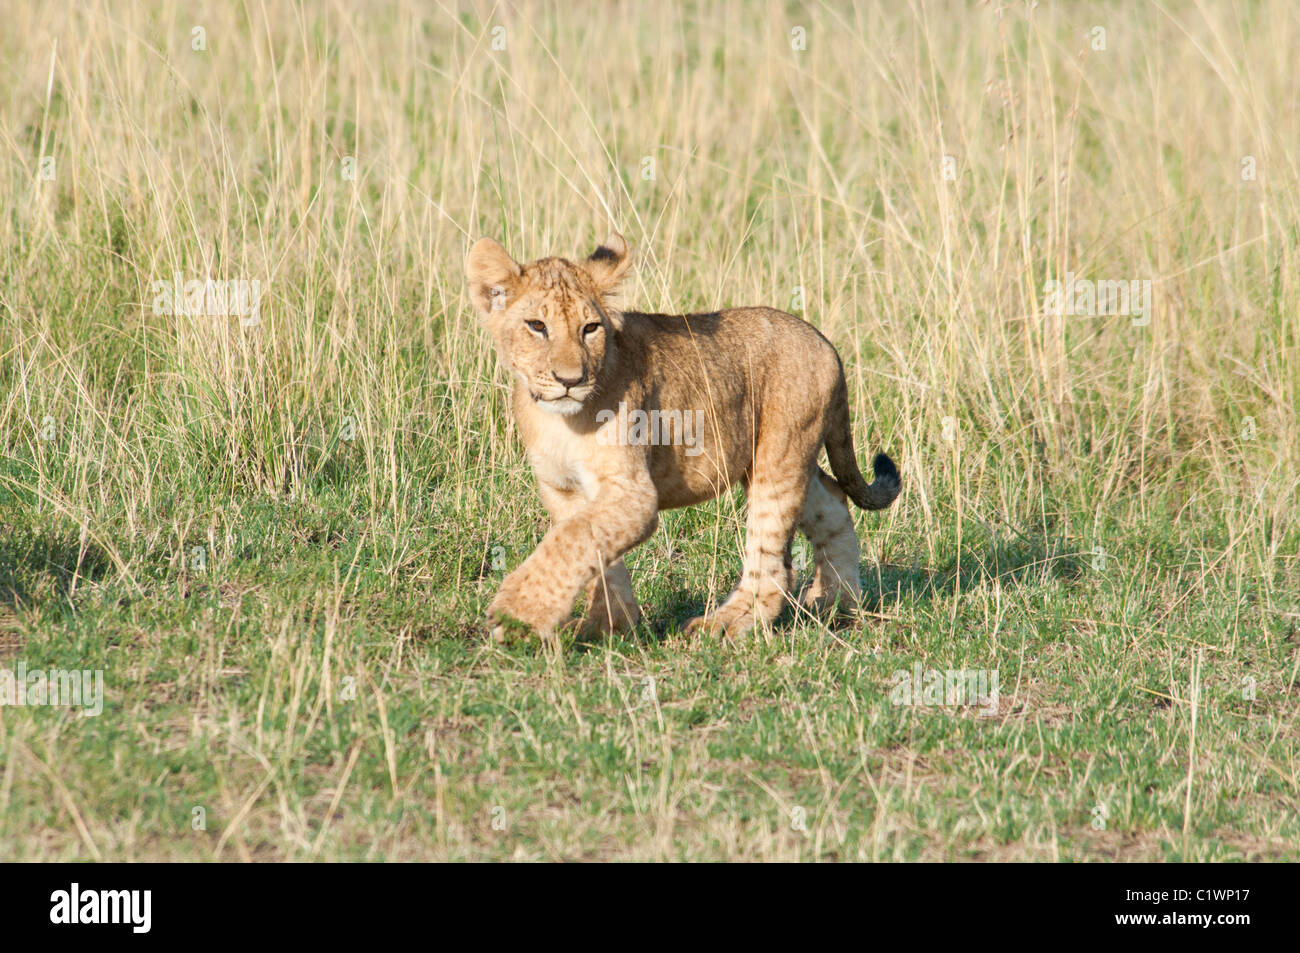 Lion, Panthera leo, Masai Mara National Reserve, Kenya, Africa Banque D'Images